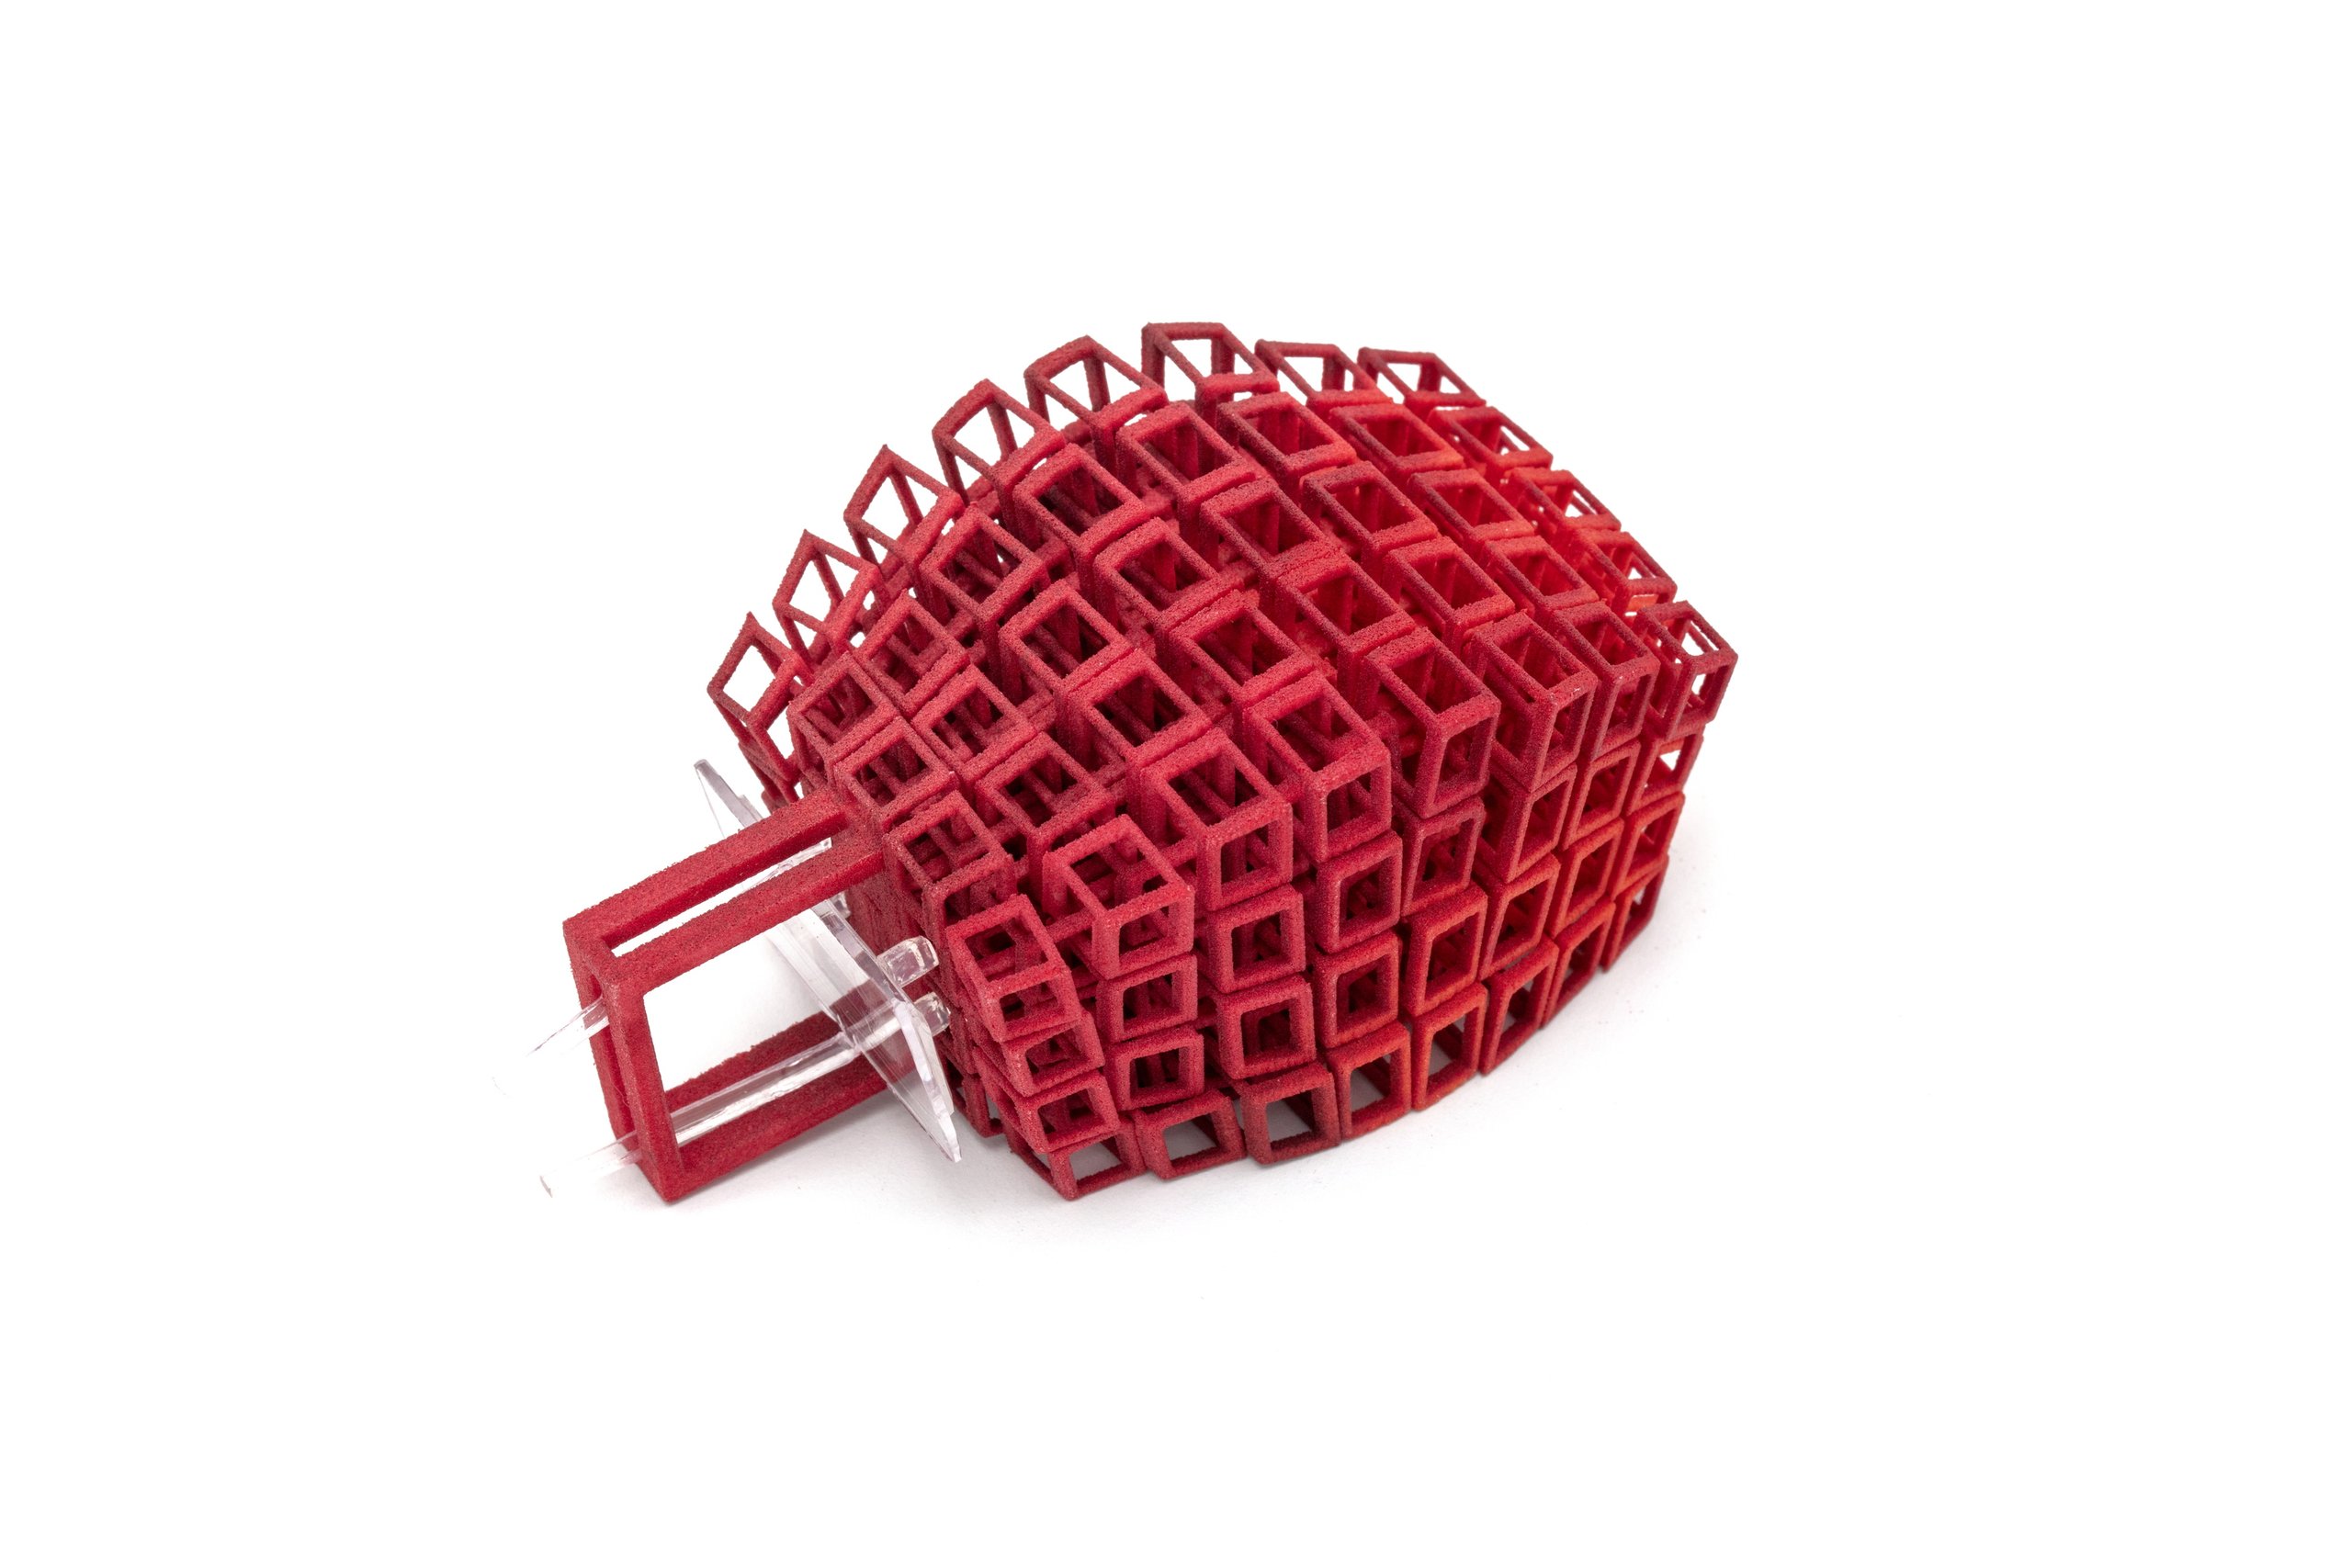 3D printed ring by Bin Dixon-Ward